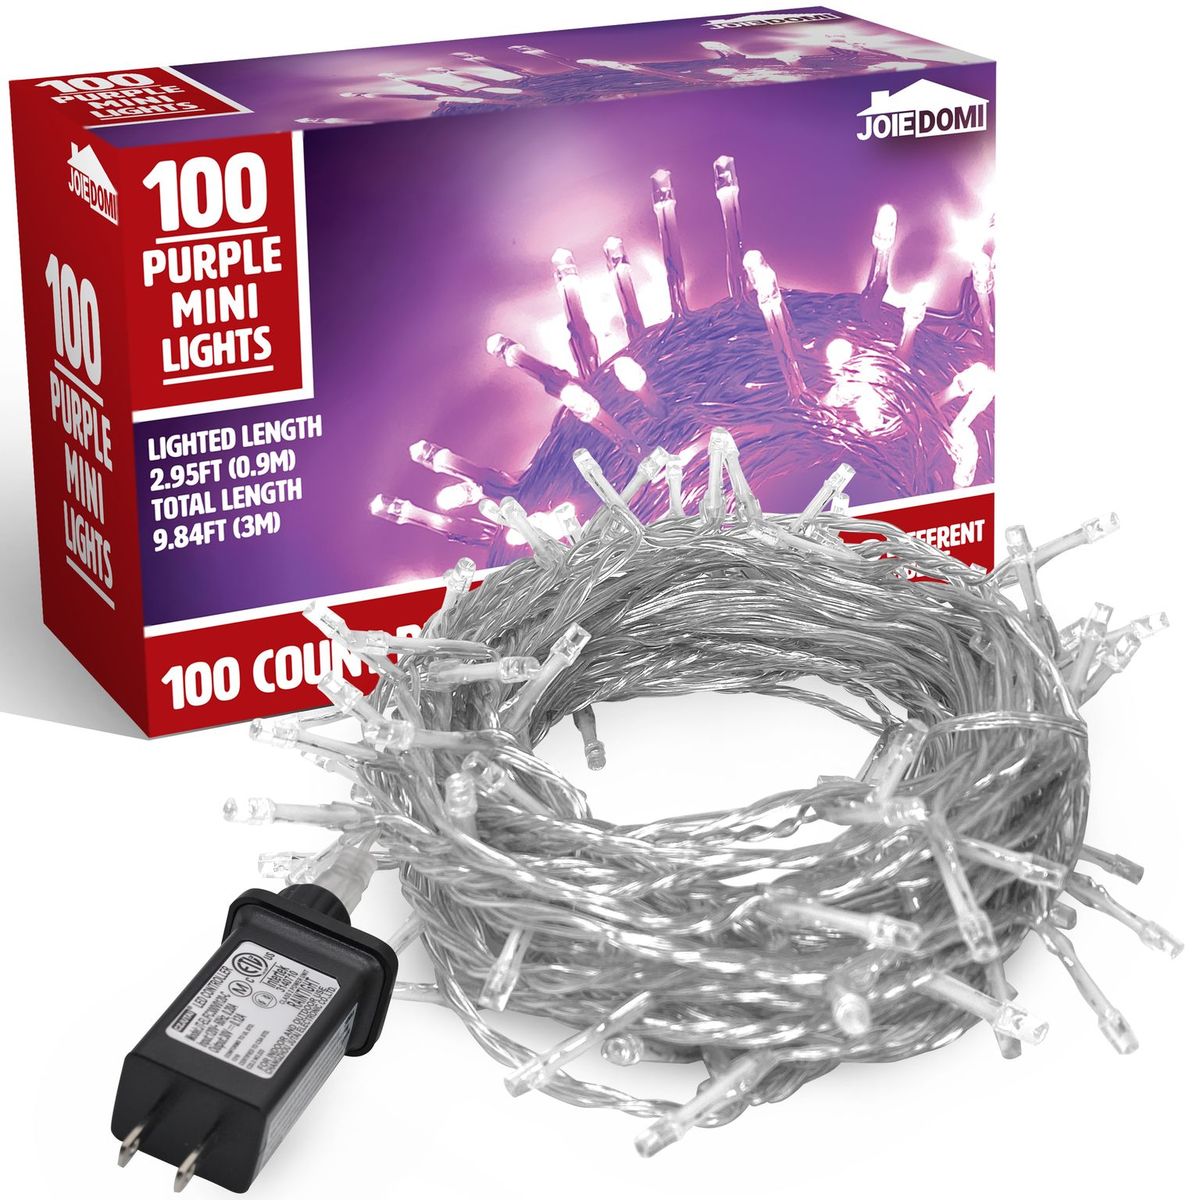 100-count LED Lights (Purple)